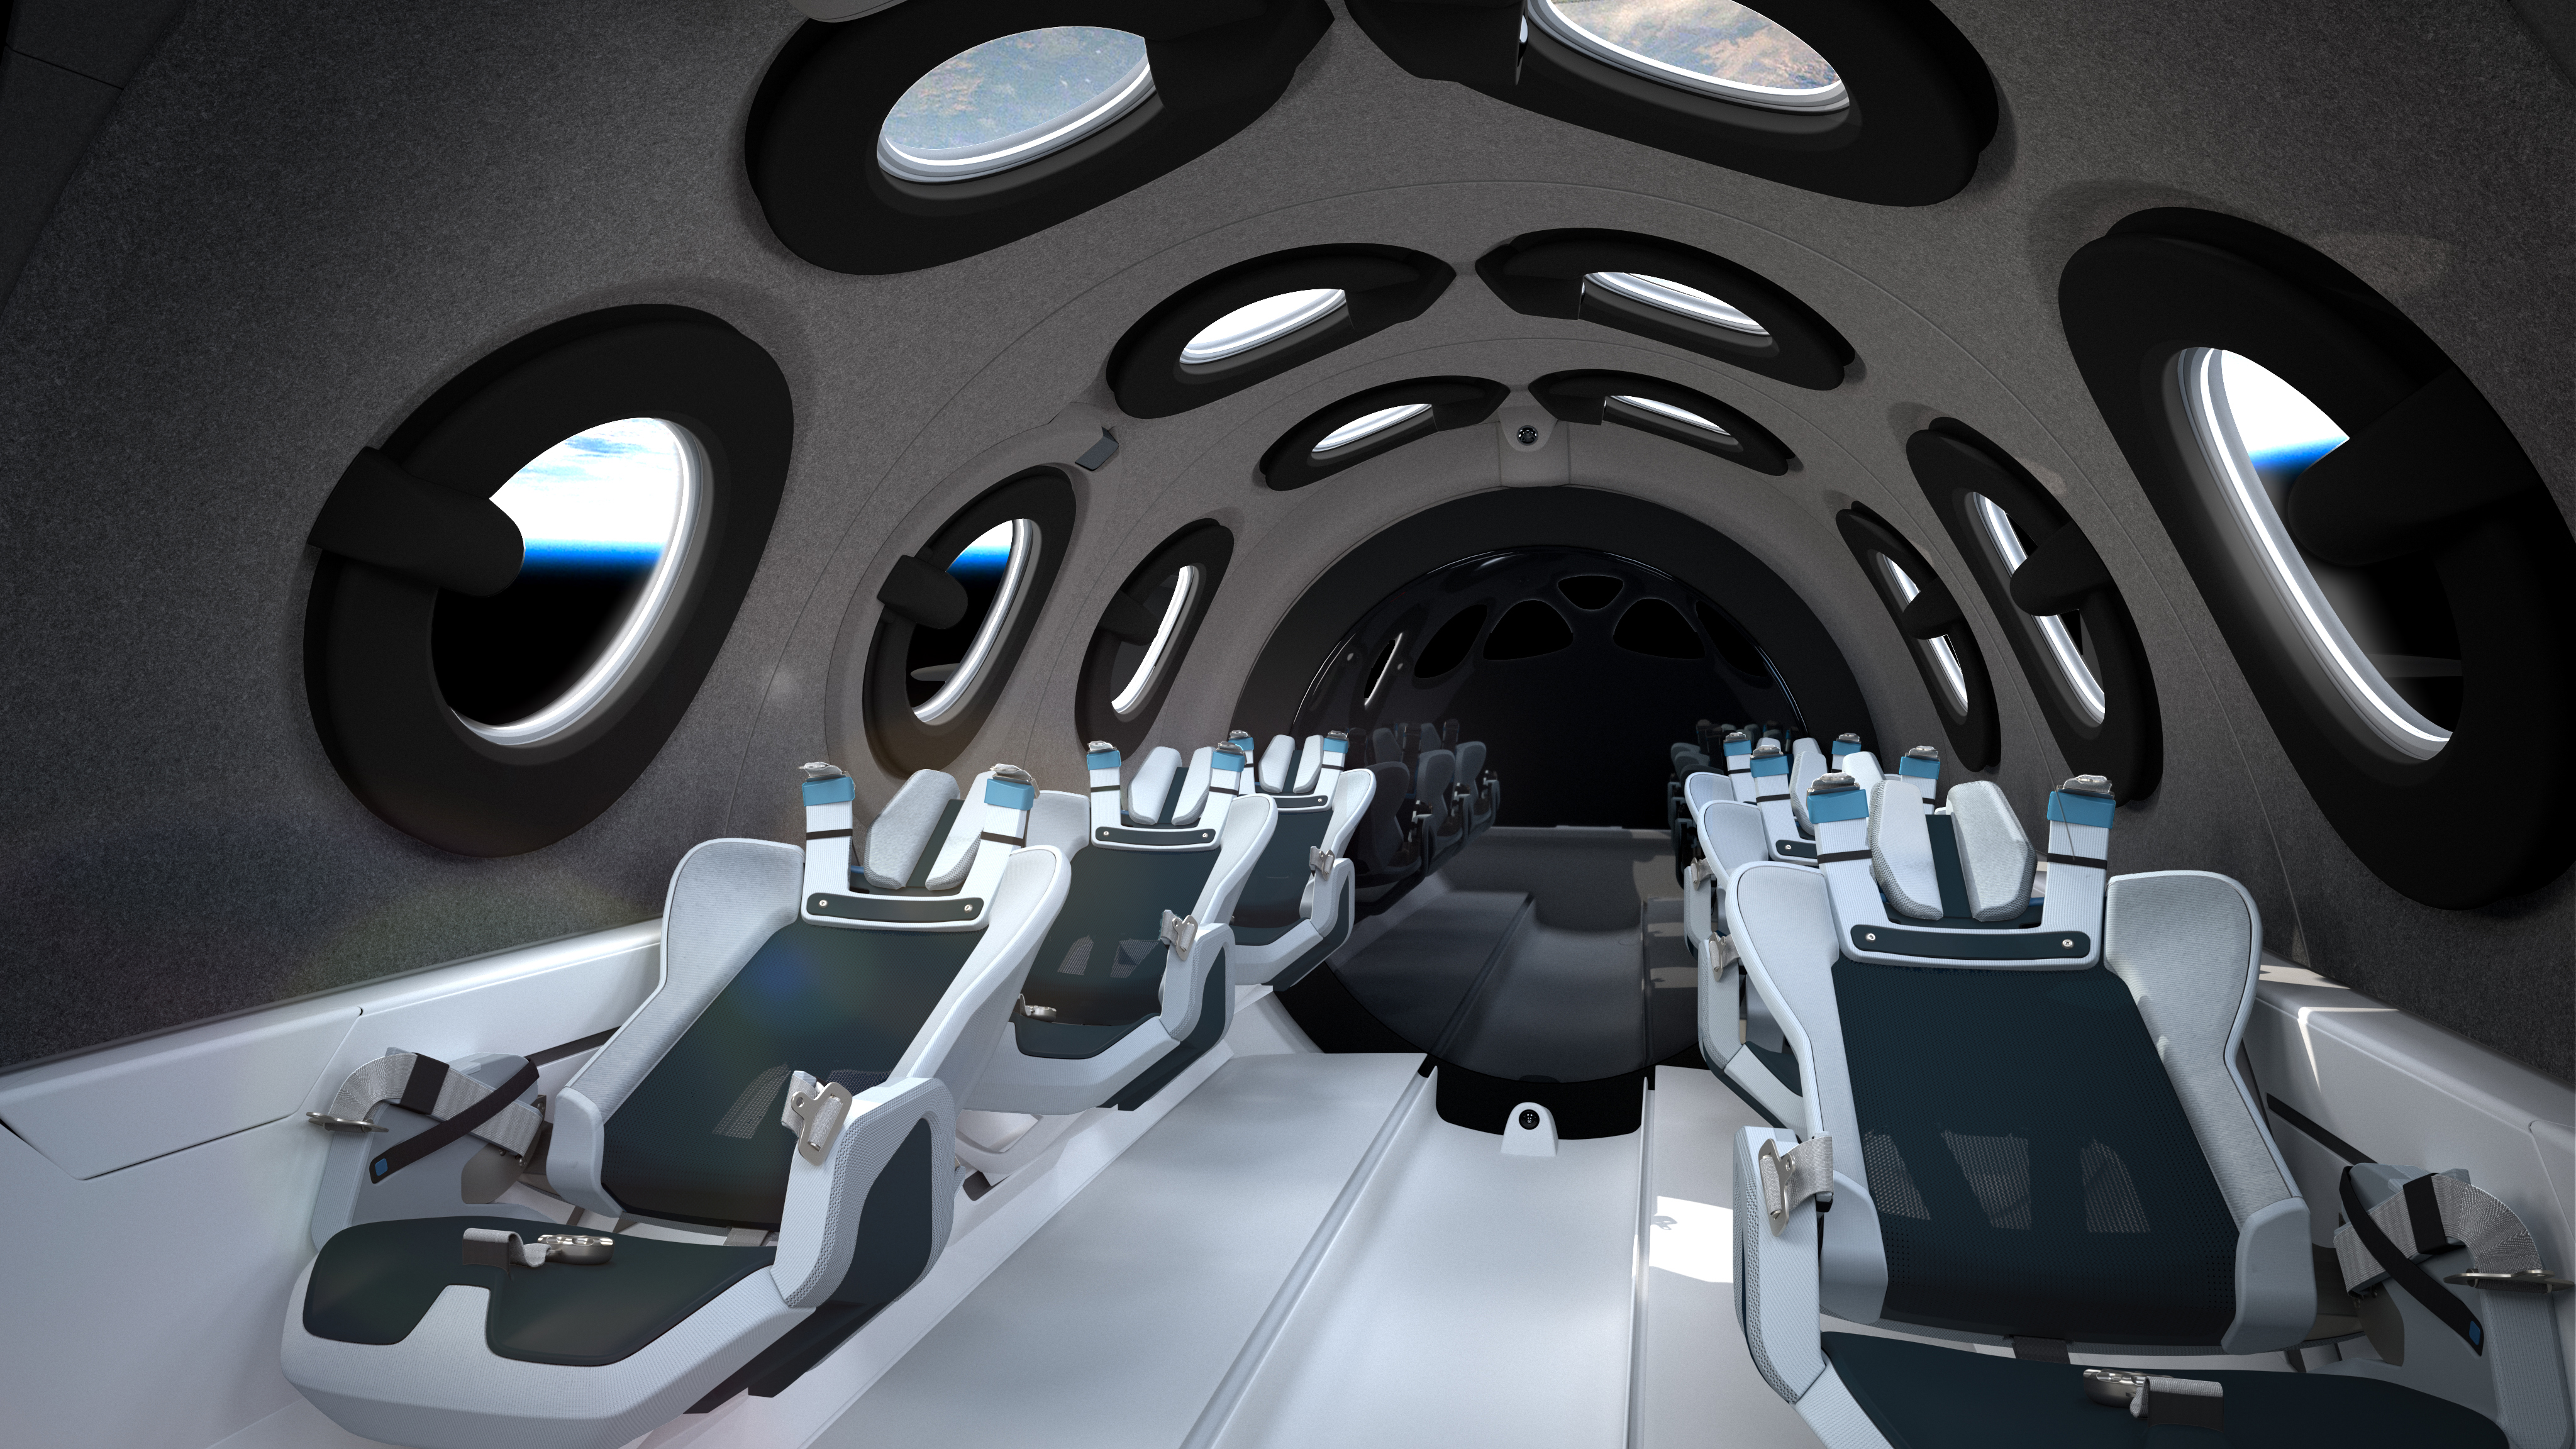 Virgin Galactic releases first look inside SpaceShip Two